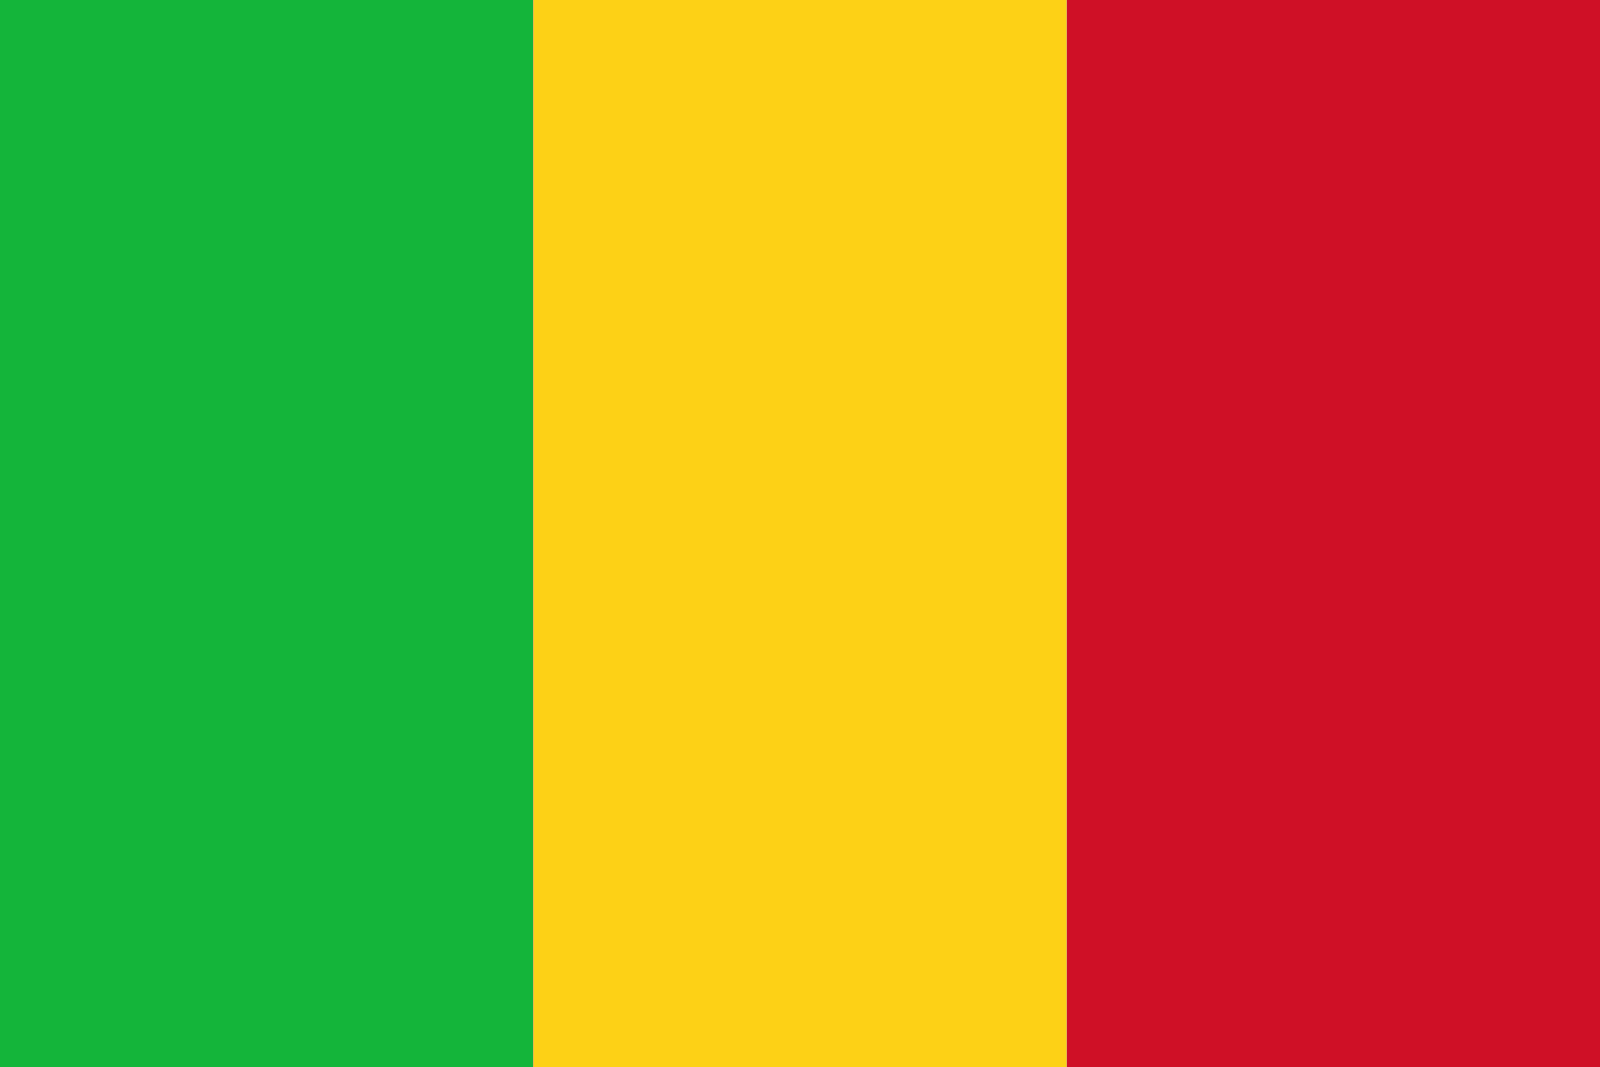 Malianske flag